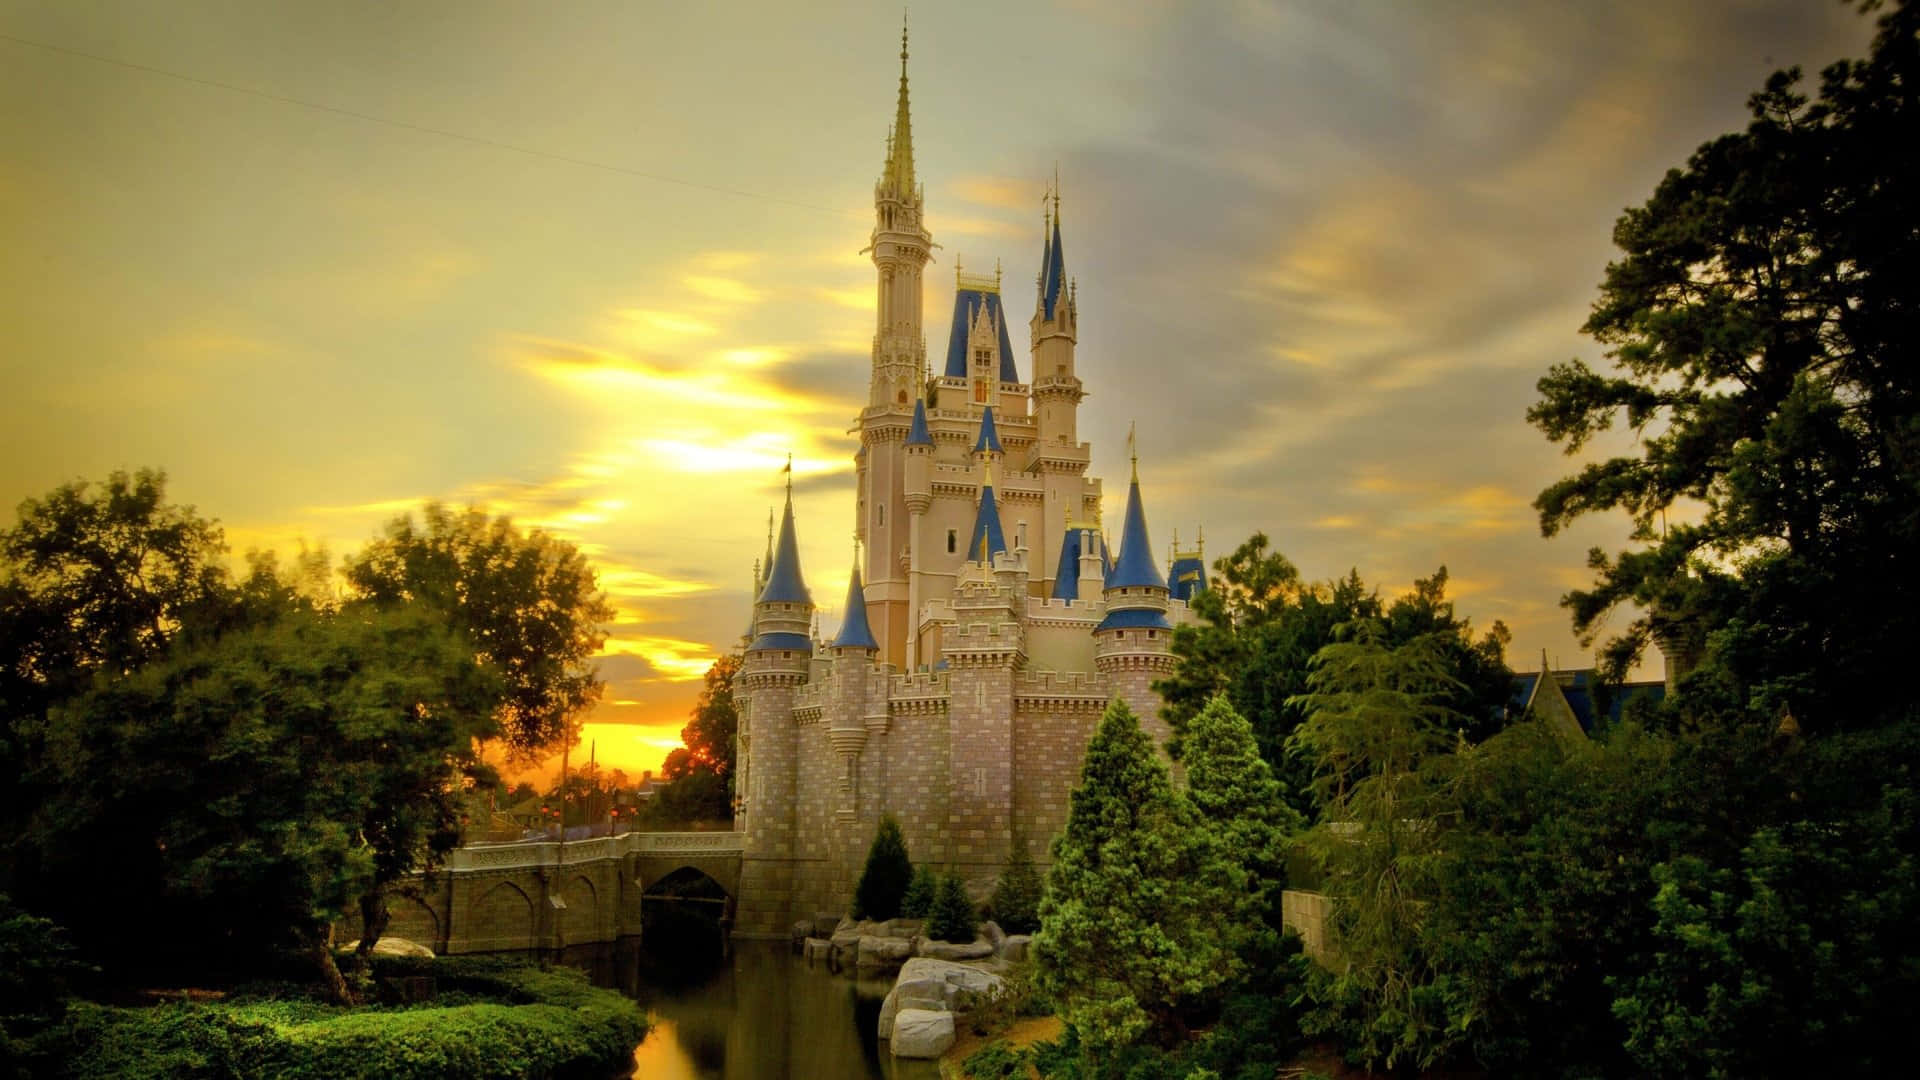 "Exploring the Magic at Disney World" Wallpaper